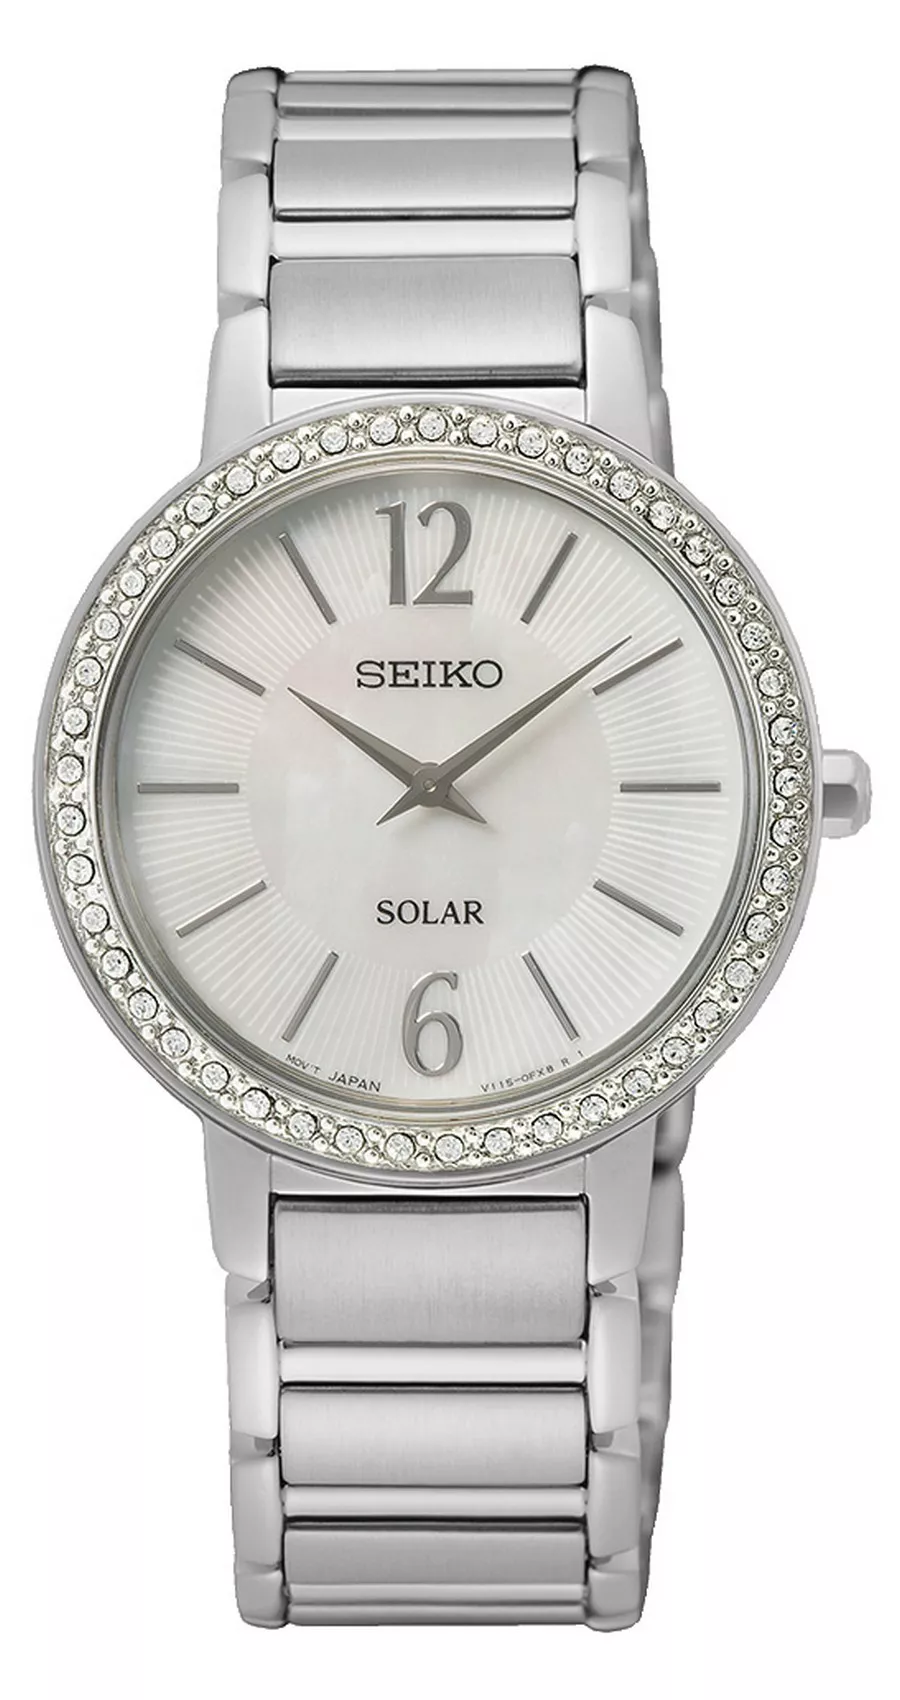 Seiko SUP467P1 Horloge Solar staal zilverkleurig-parelmoer 30,5 mm